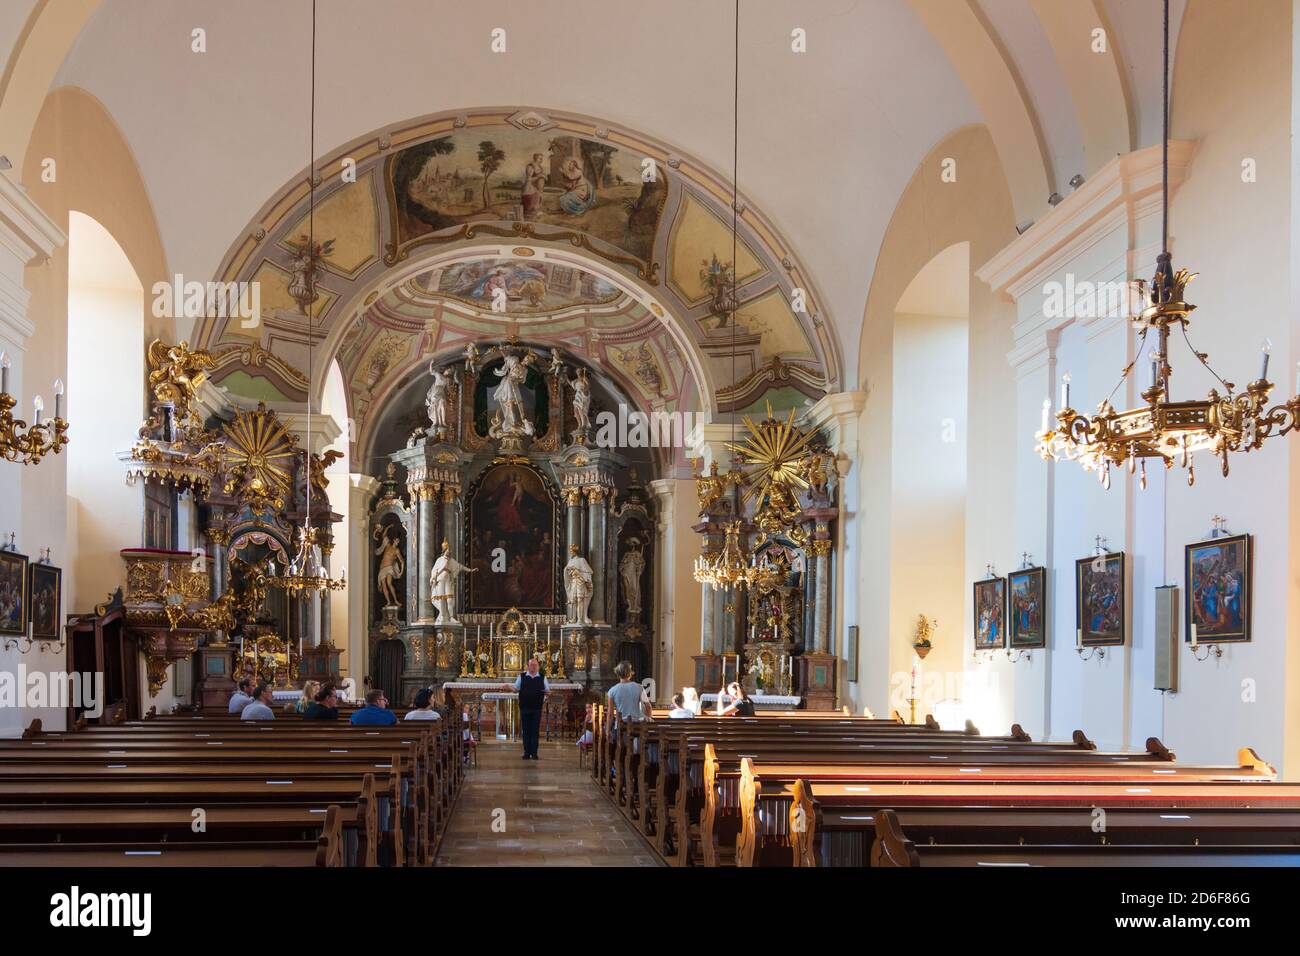 Jois, church at Neusiedler See (Lake Neusiedl), Burgenland, Austria Stock Photo